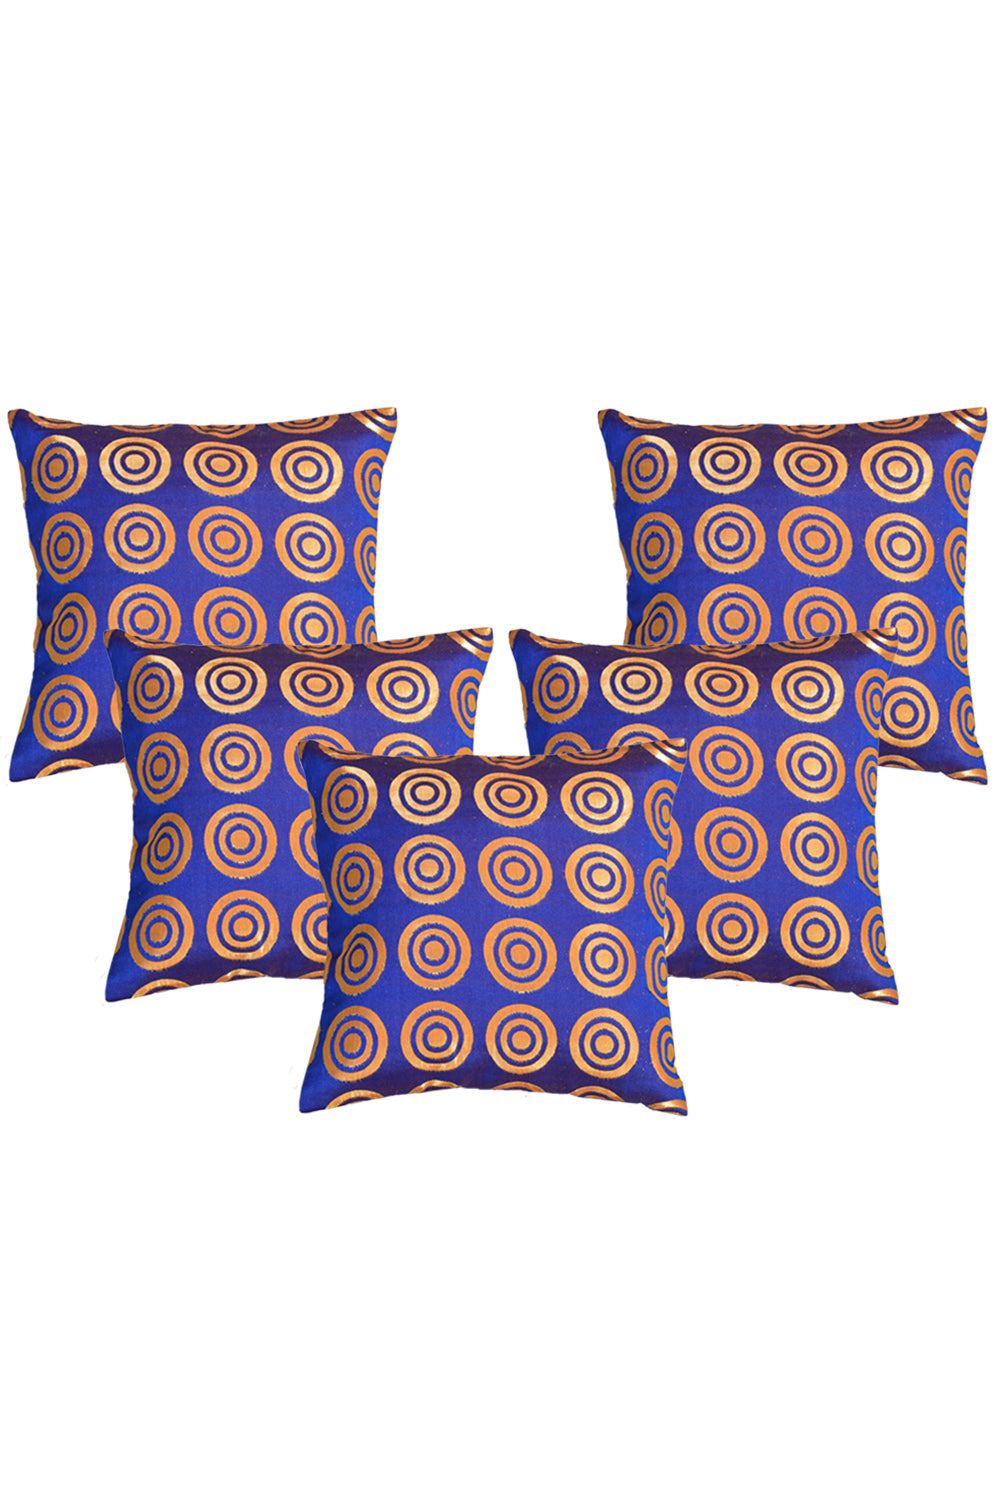 Silkfab Set 0f 5 Decorative Silk Cushion Covers (16x16) Circle Blue - SILKFAB